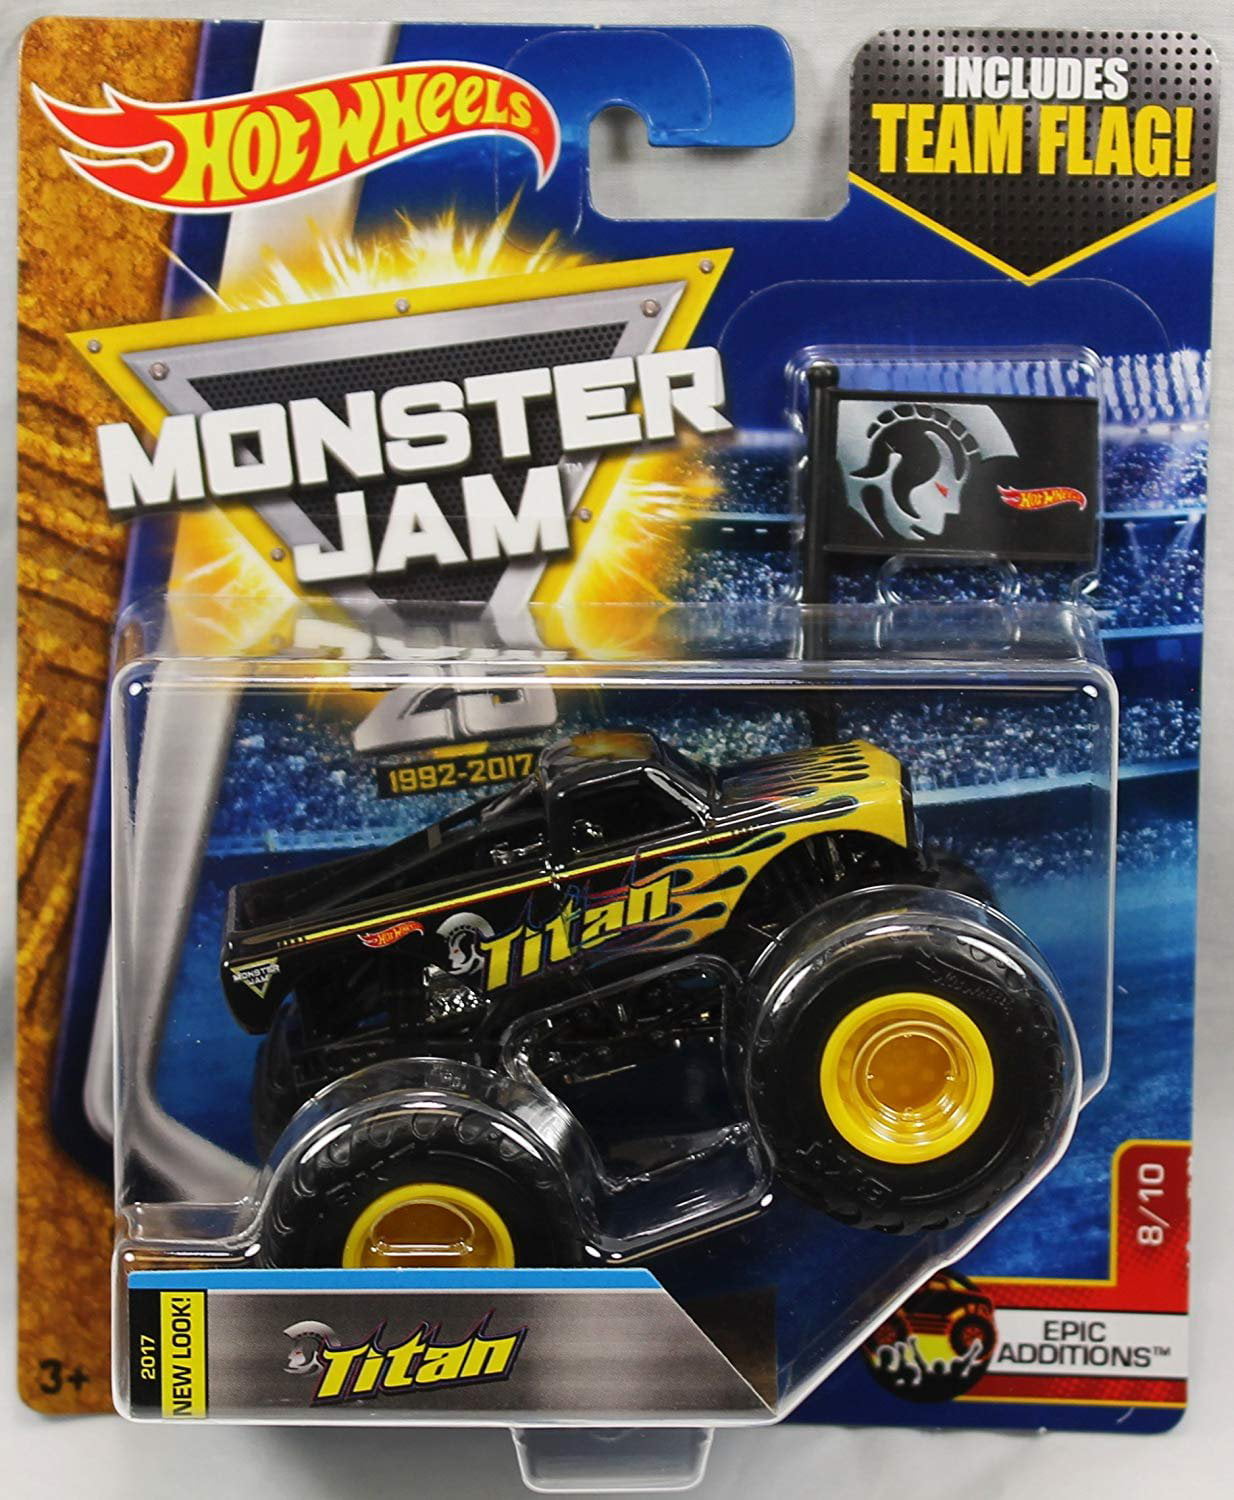 2017 Hot Wheels Monster Jam 1:64 Scale Truck with Team Flag - Black